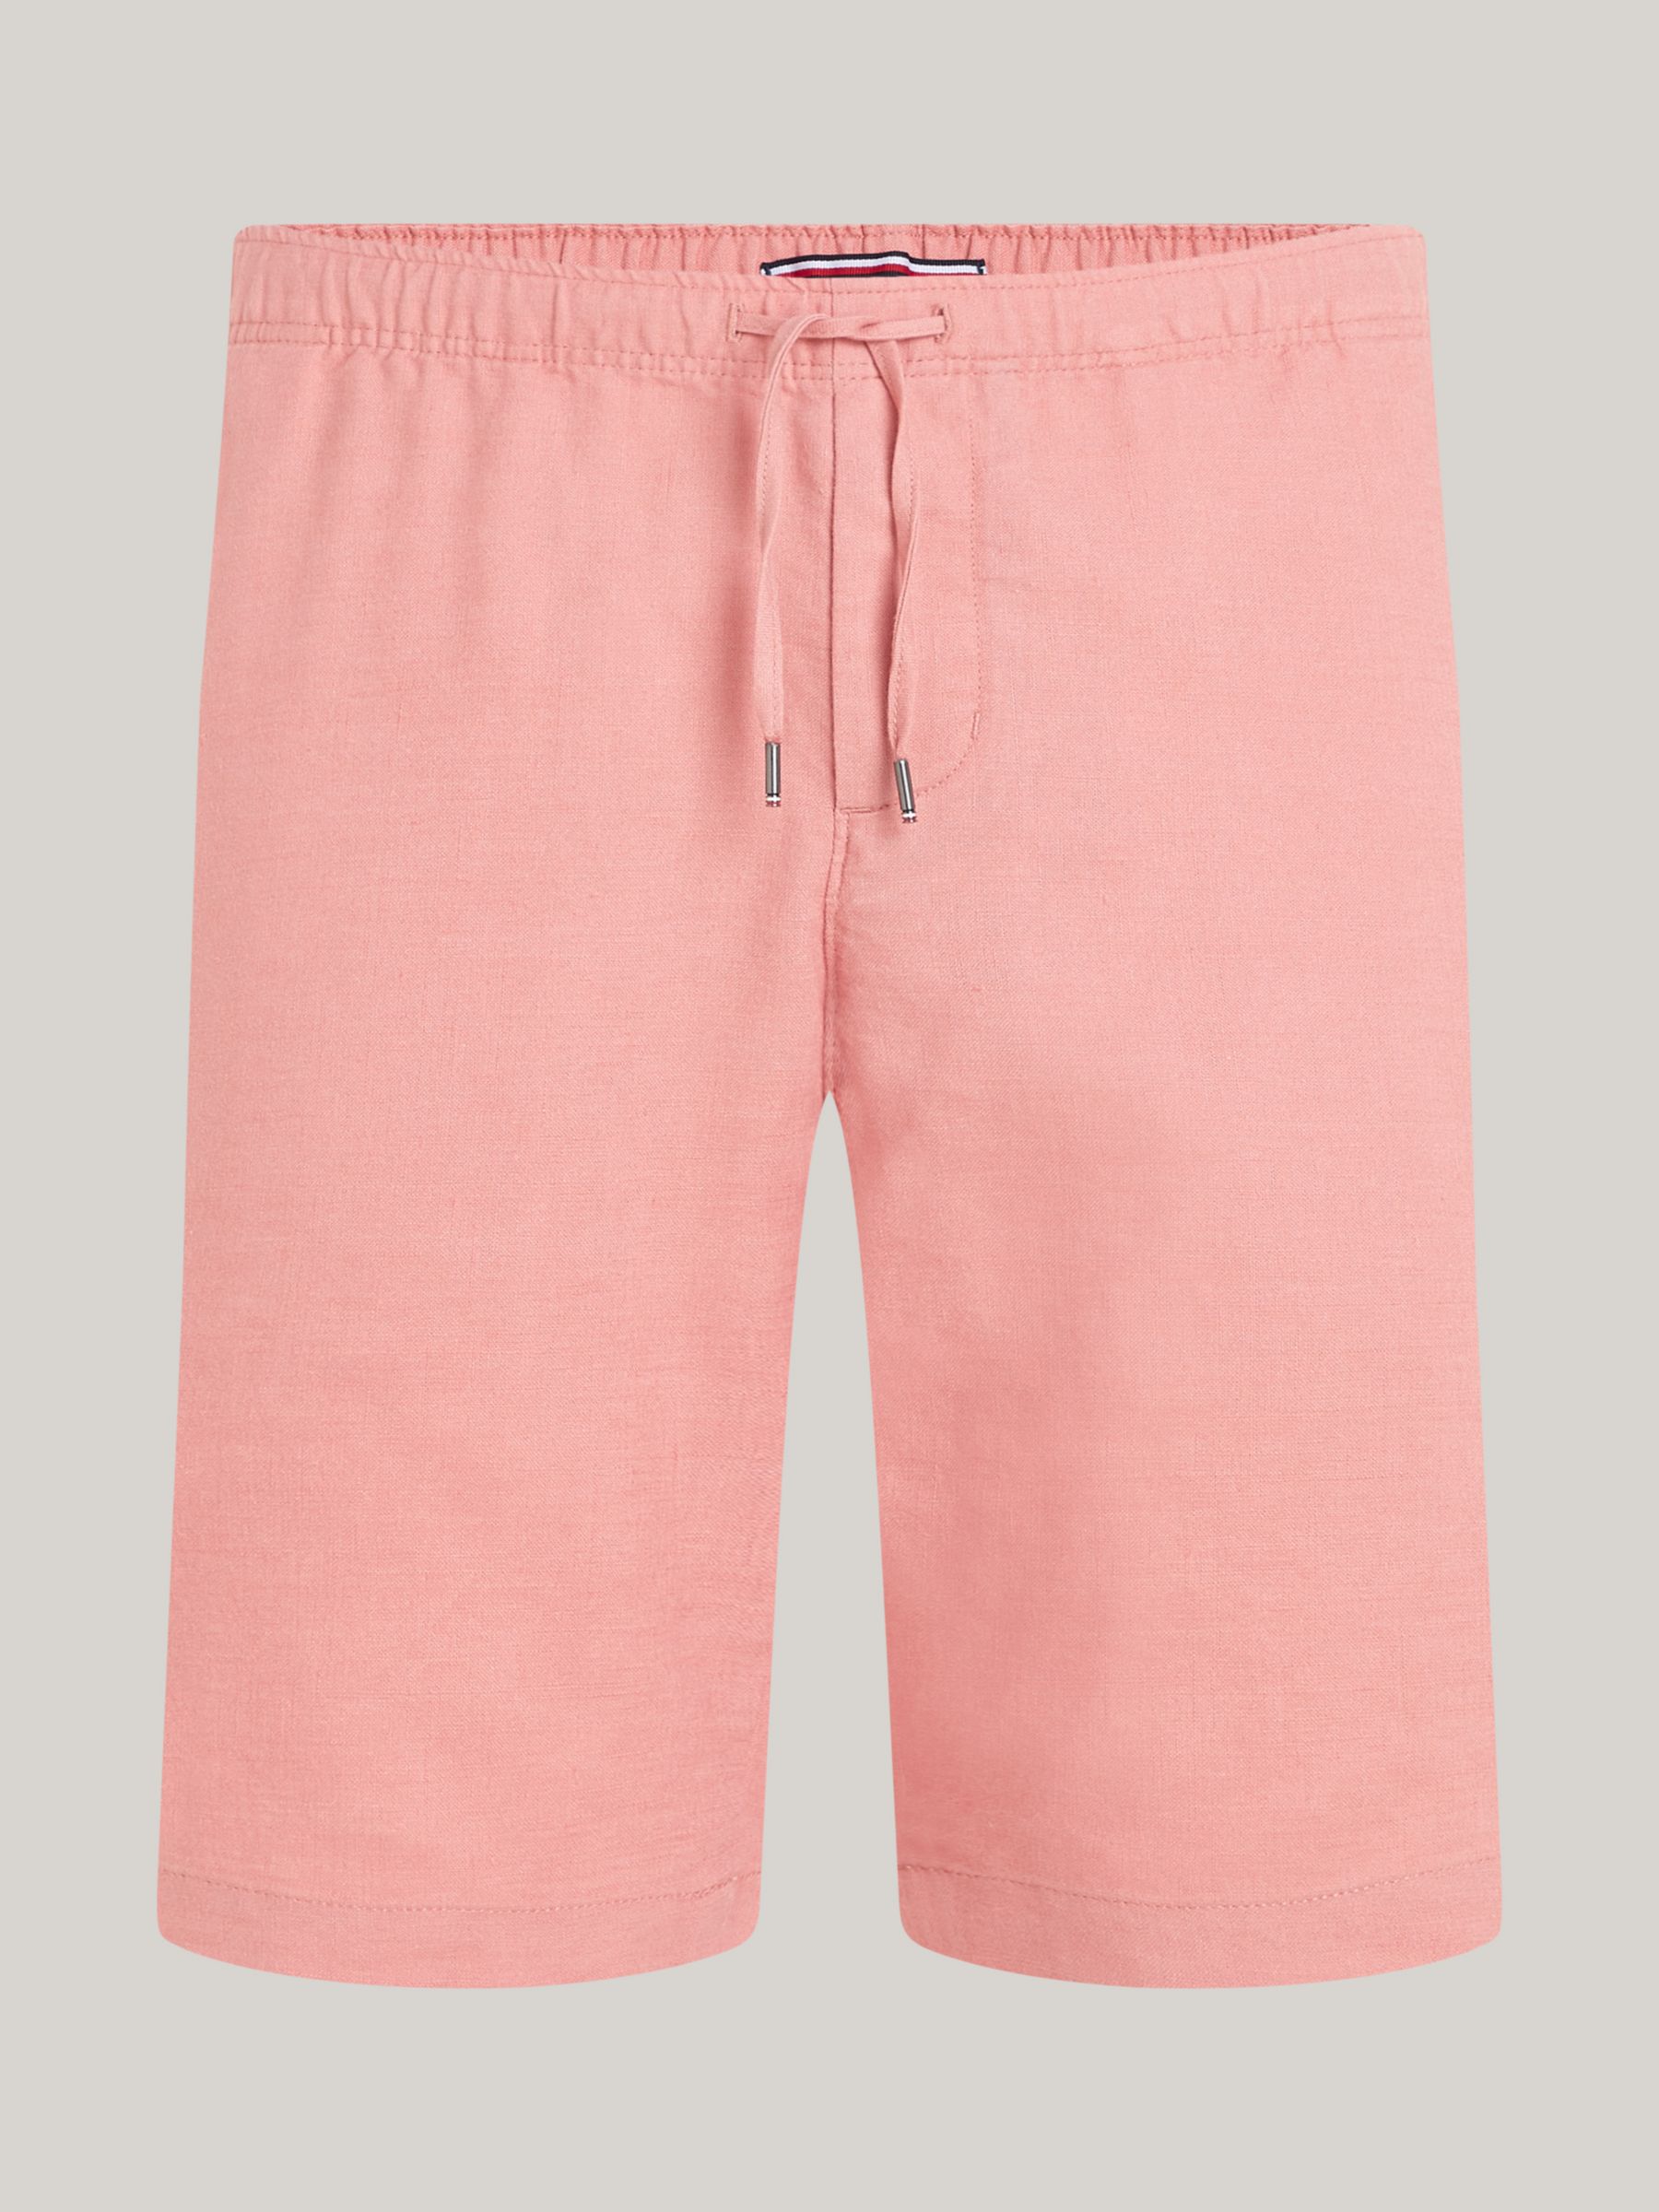 Tommy Hilfiger Harlem Linen Shorts, Teaberry Blossom, 30R